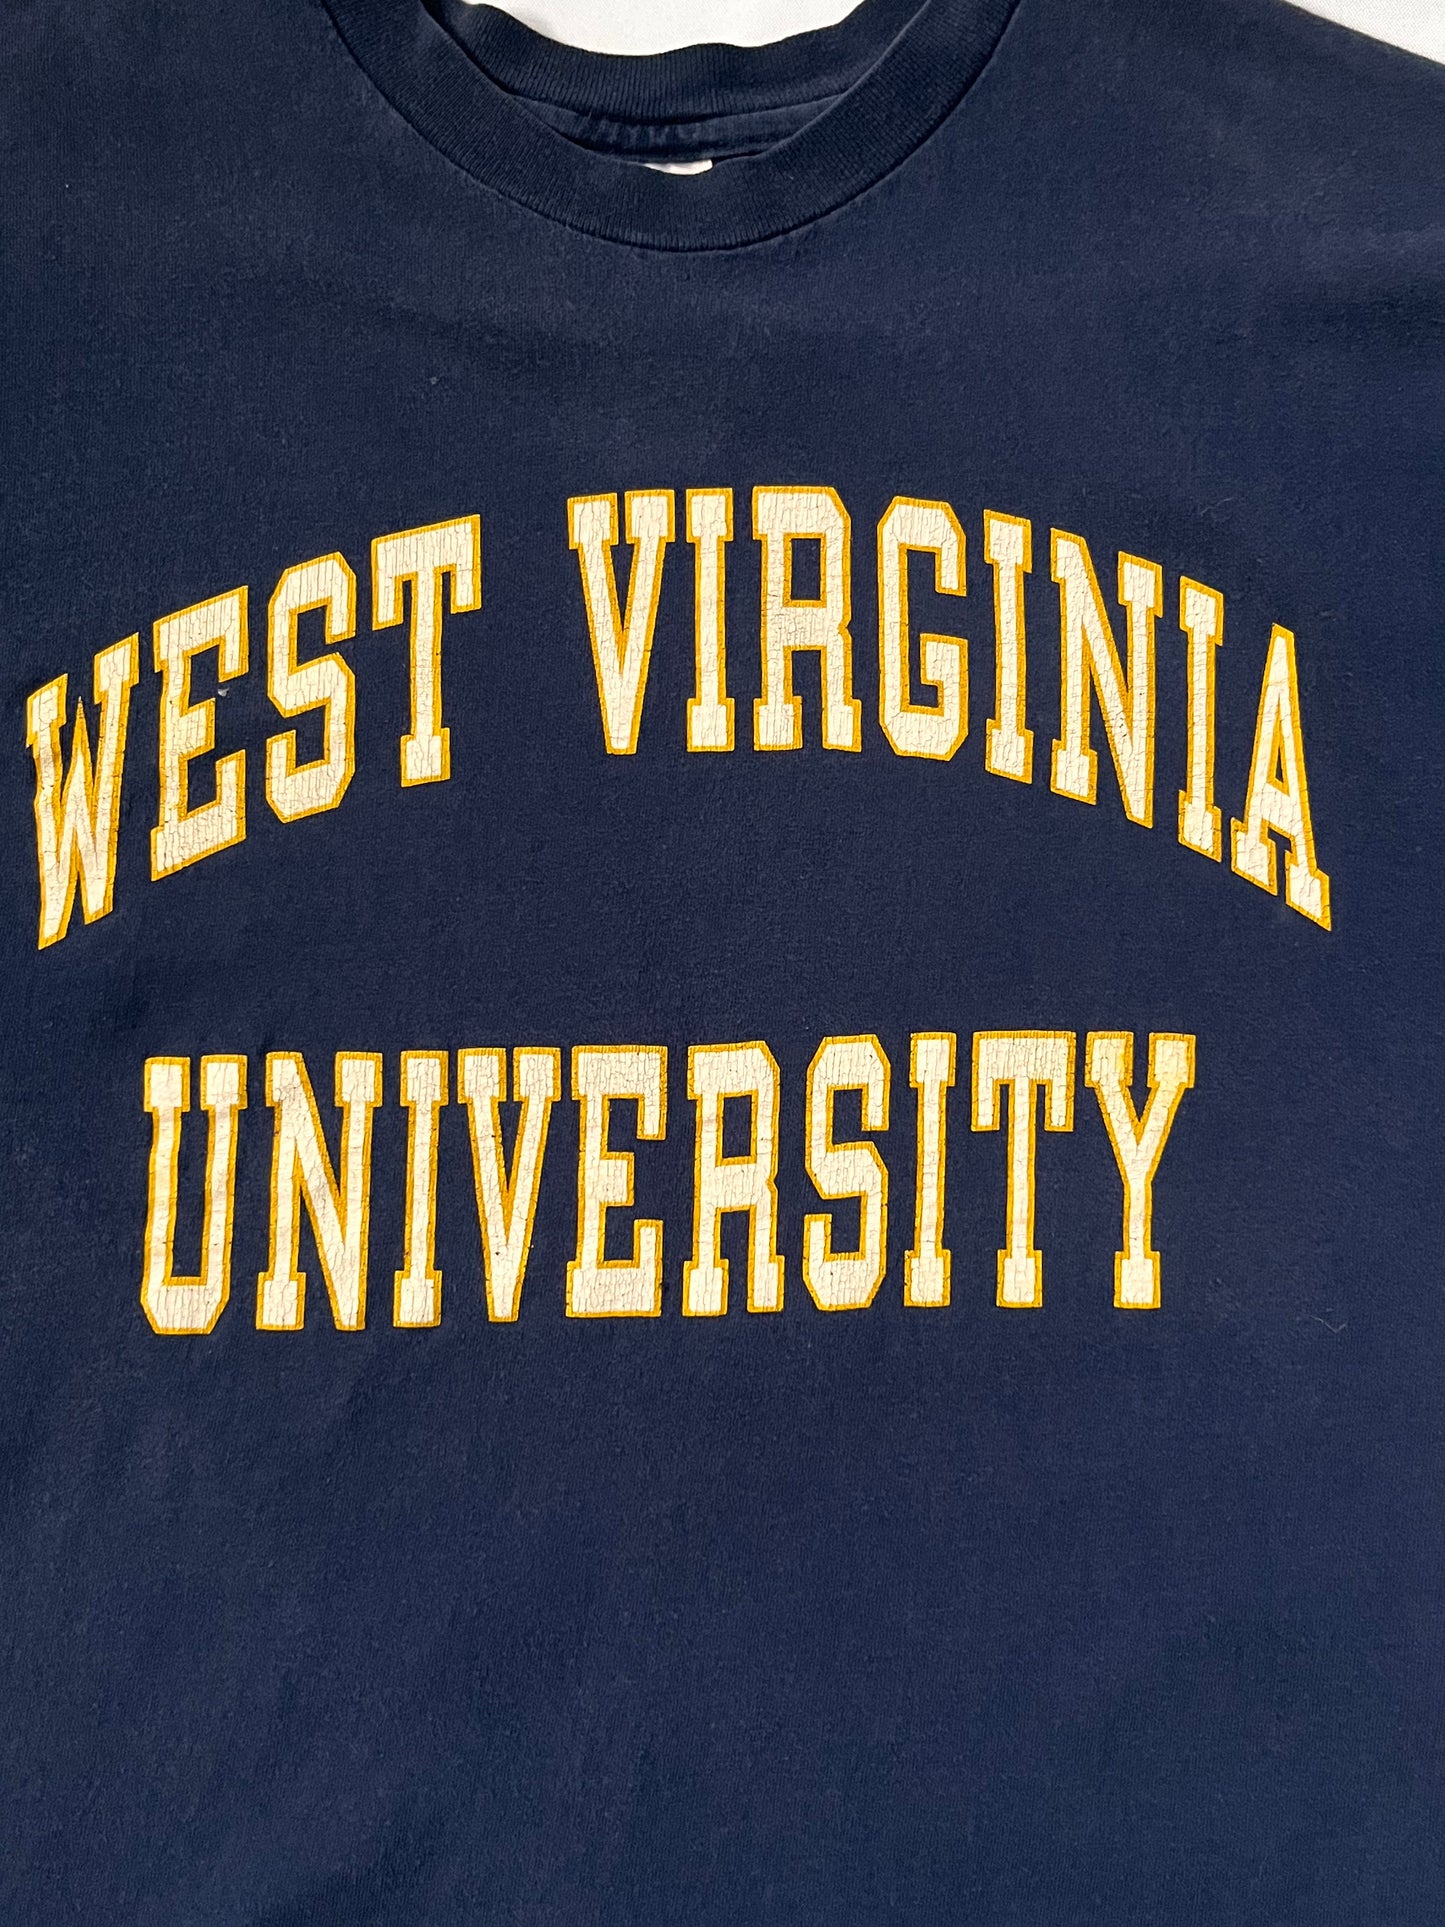 90s West Virginia University Champion T shirt